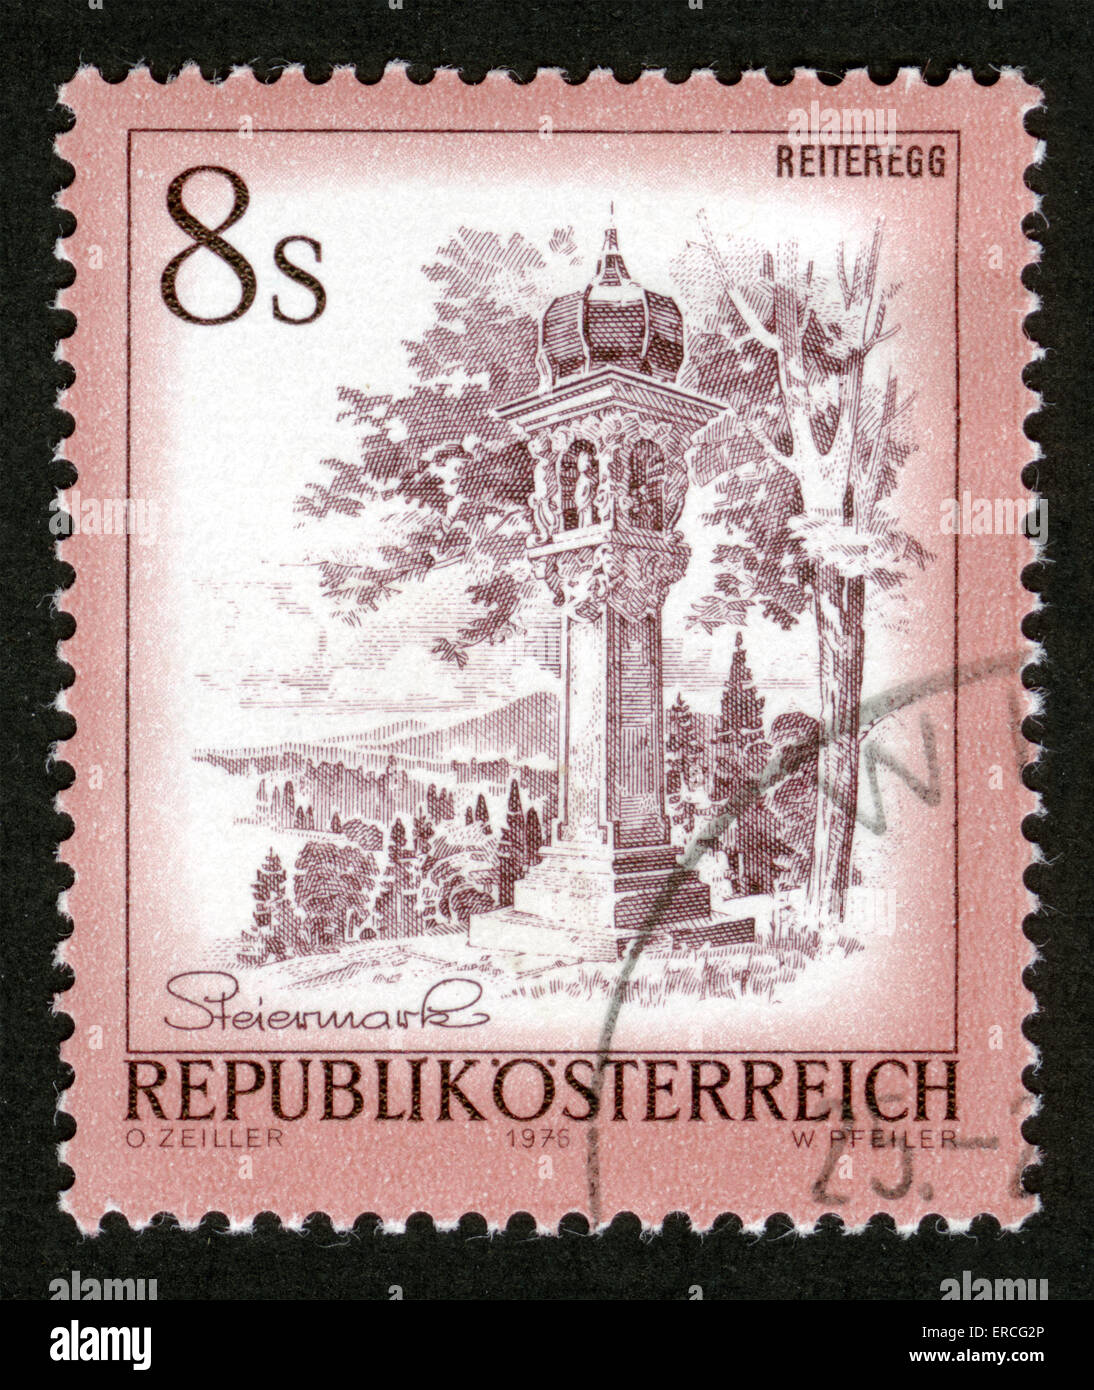 Reiteregg, Estiria, sello, Austria, 1976 Foto de stock